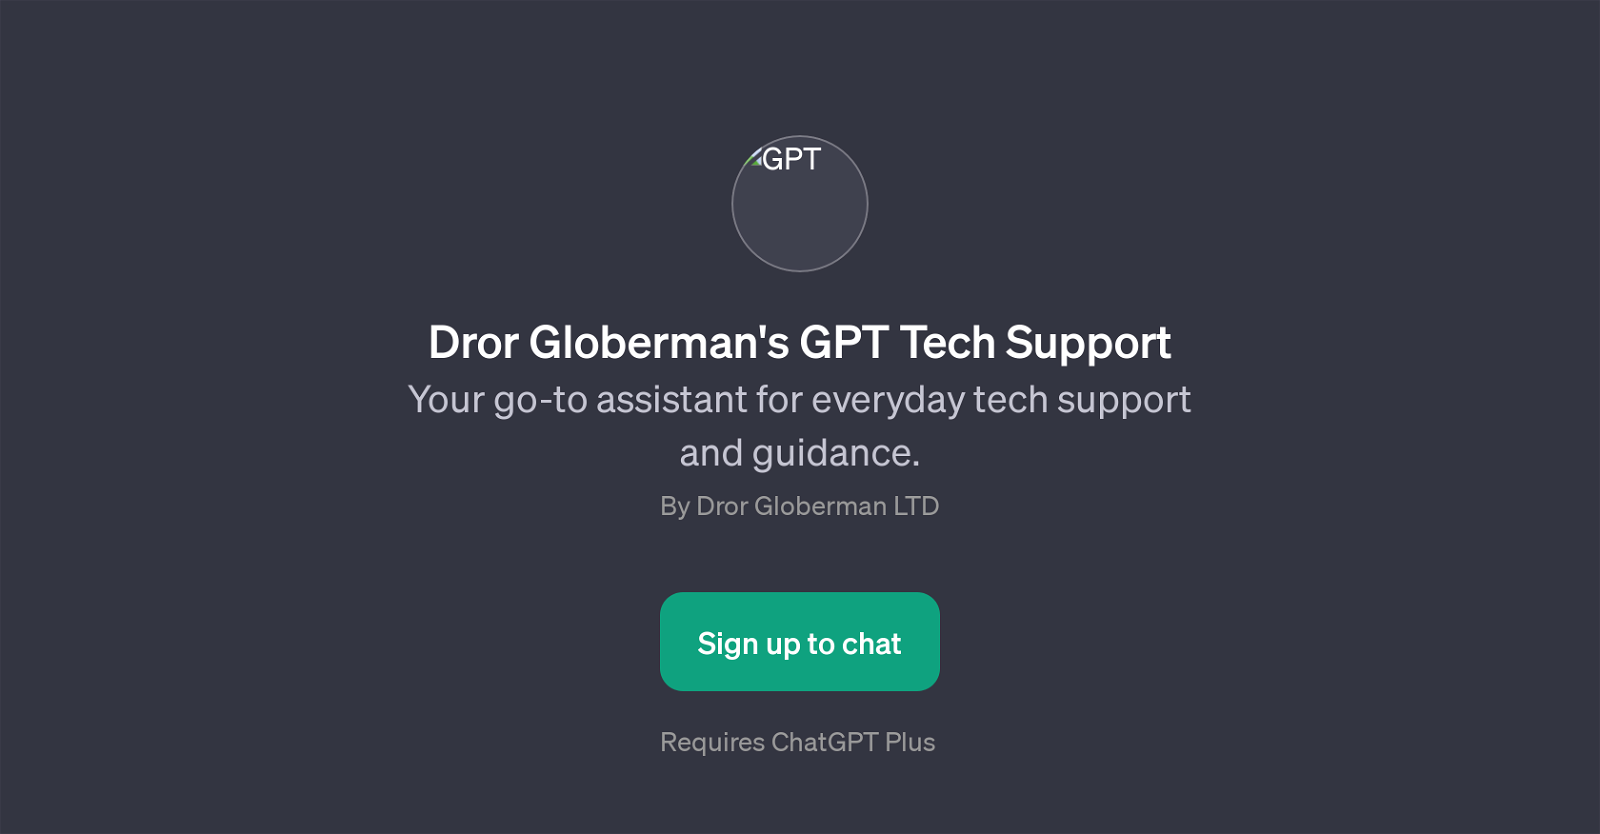 Dror Globerman's GPT Tech Support website